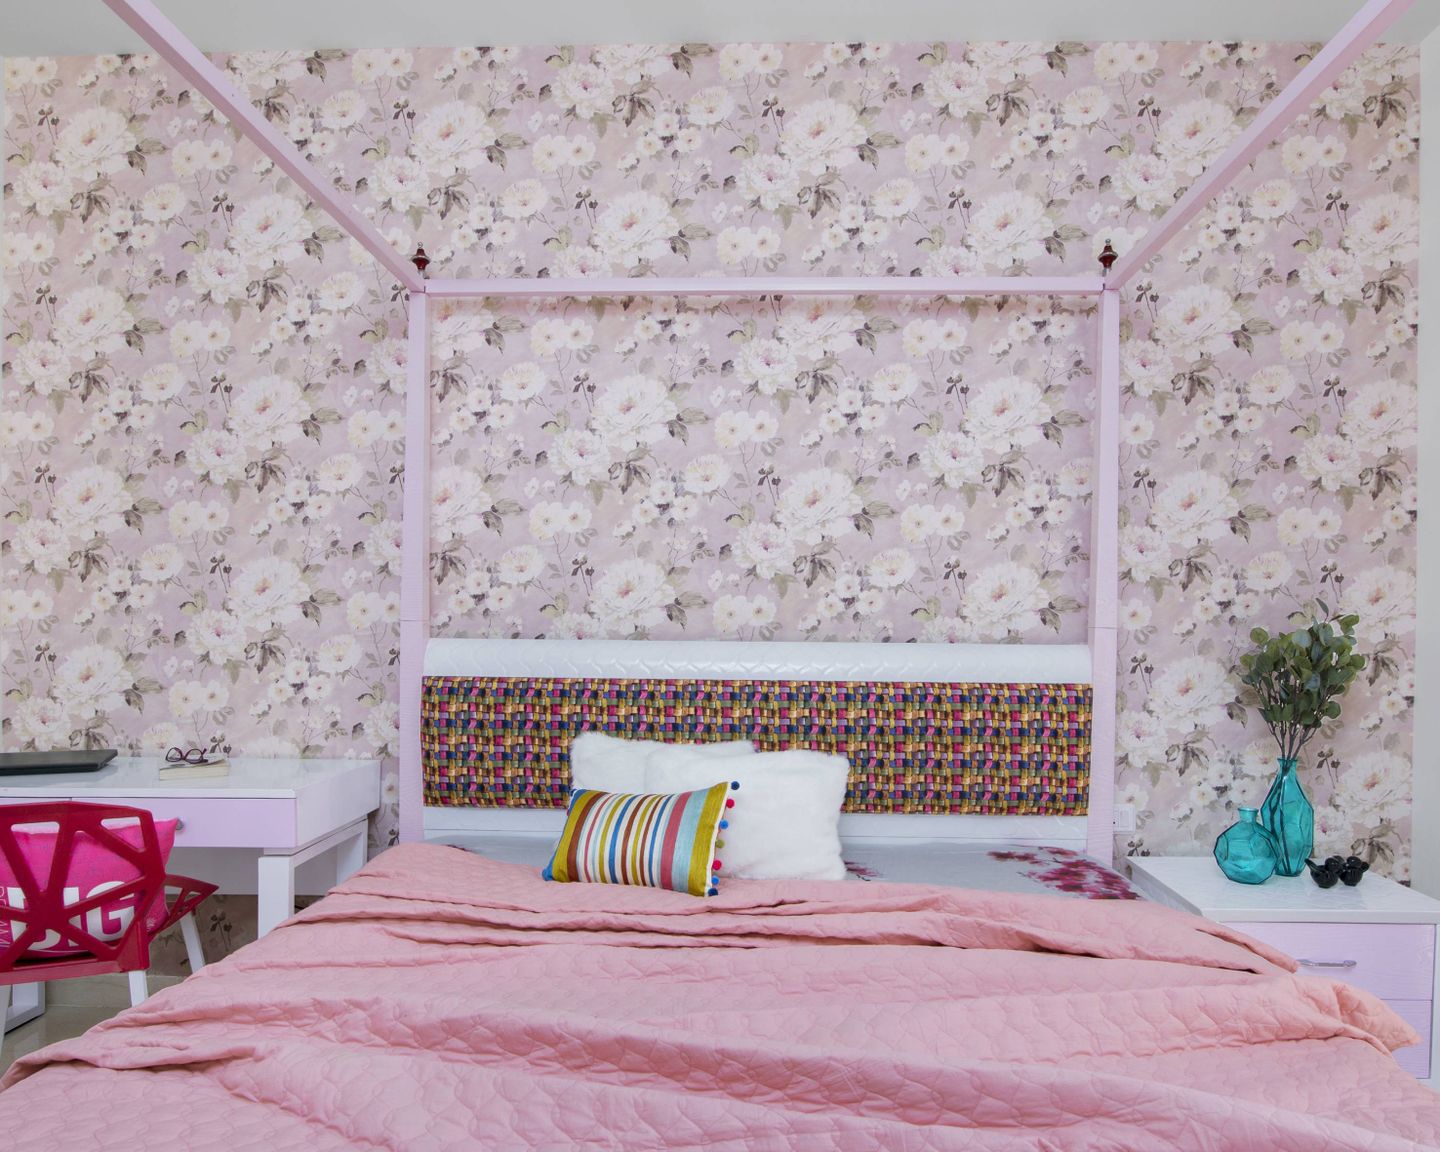 Pink And White Floral Wallpaper Design For Kids' Bedrooms - Livspace